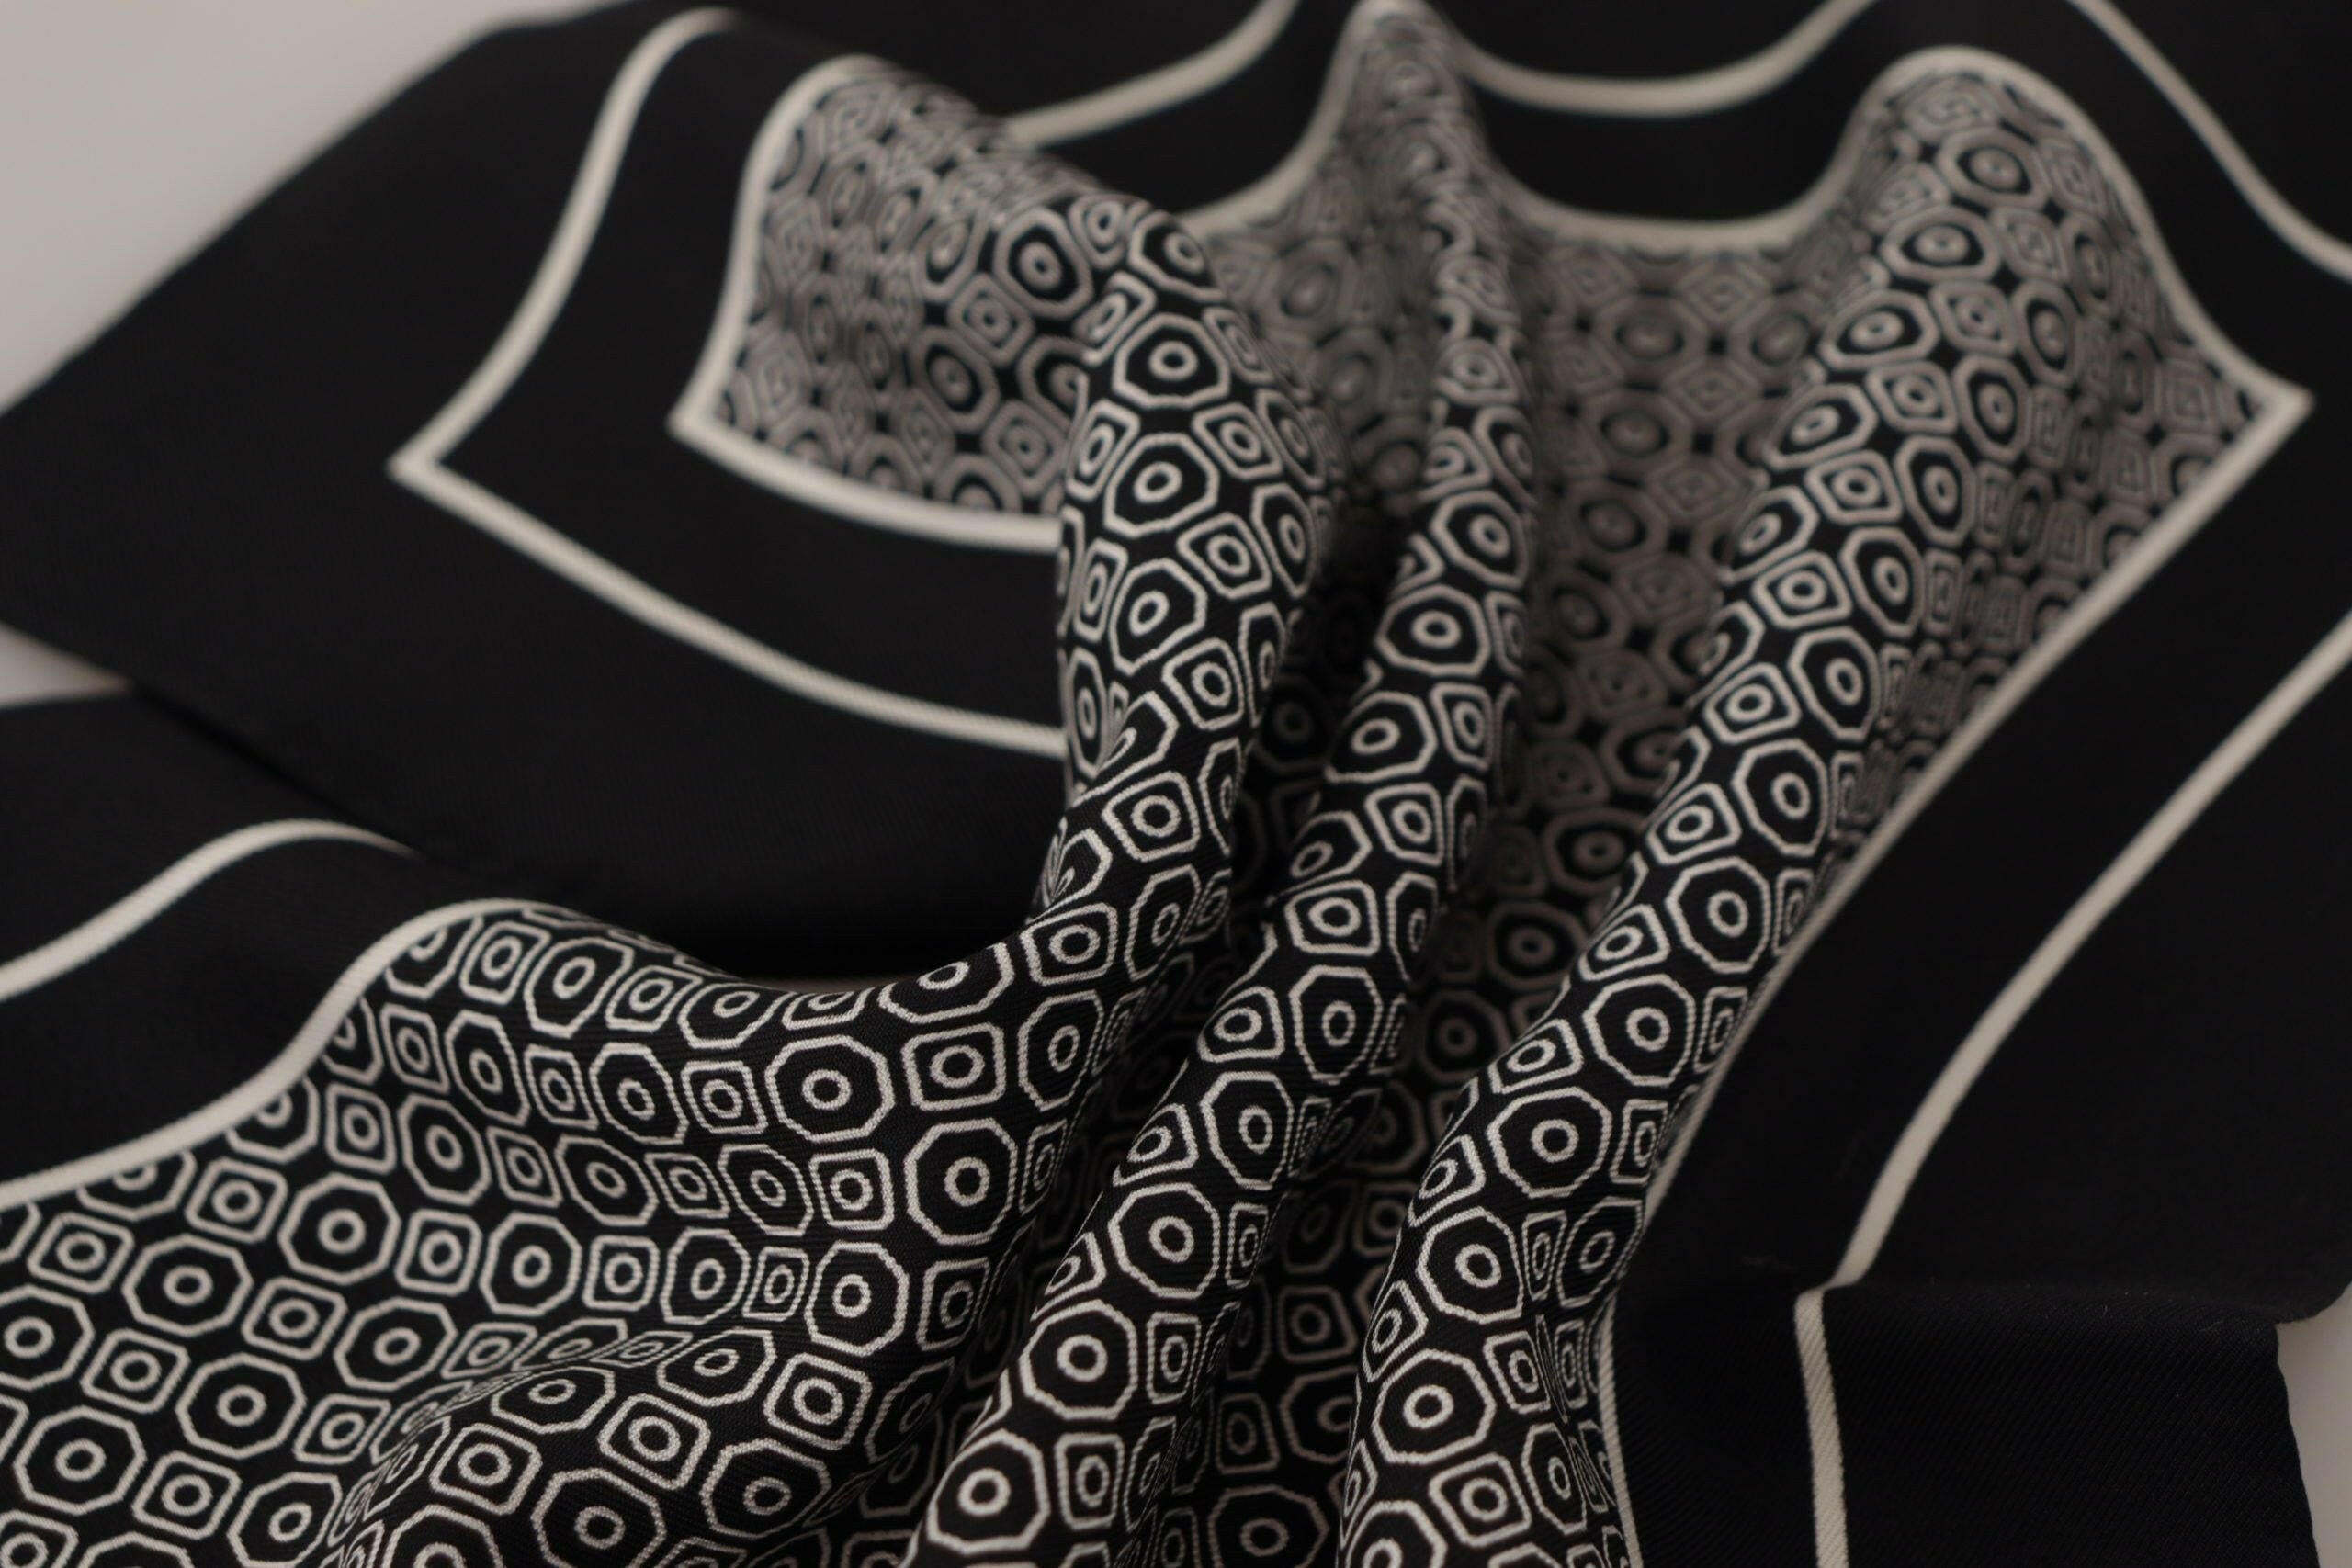 Dolce & Gabbana Black Geometric Patterned Square Handkerchief Scarf - GENUINE AUTHENTIC BRAND LLC  